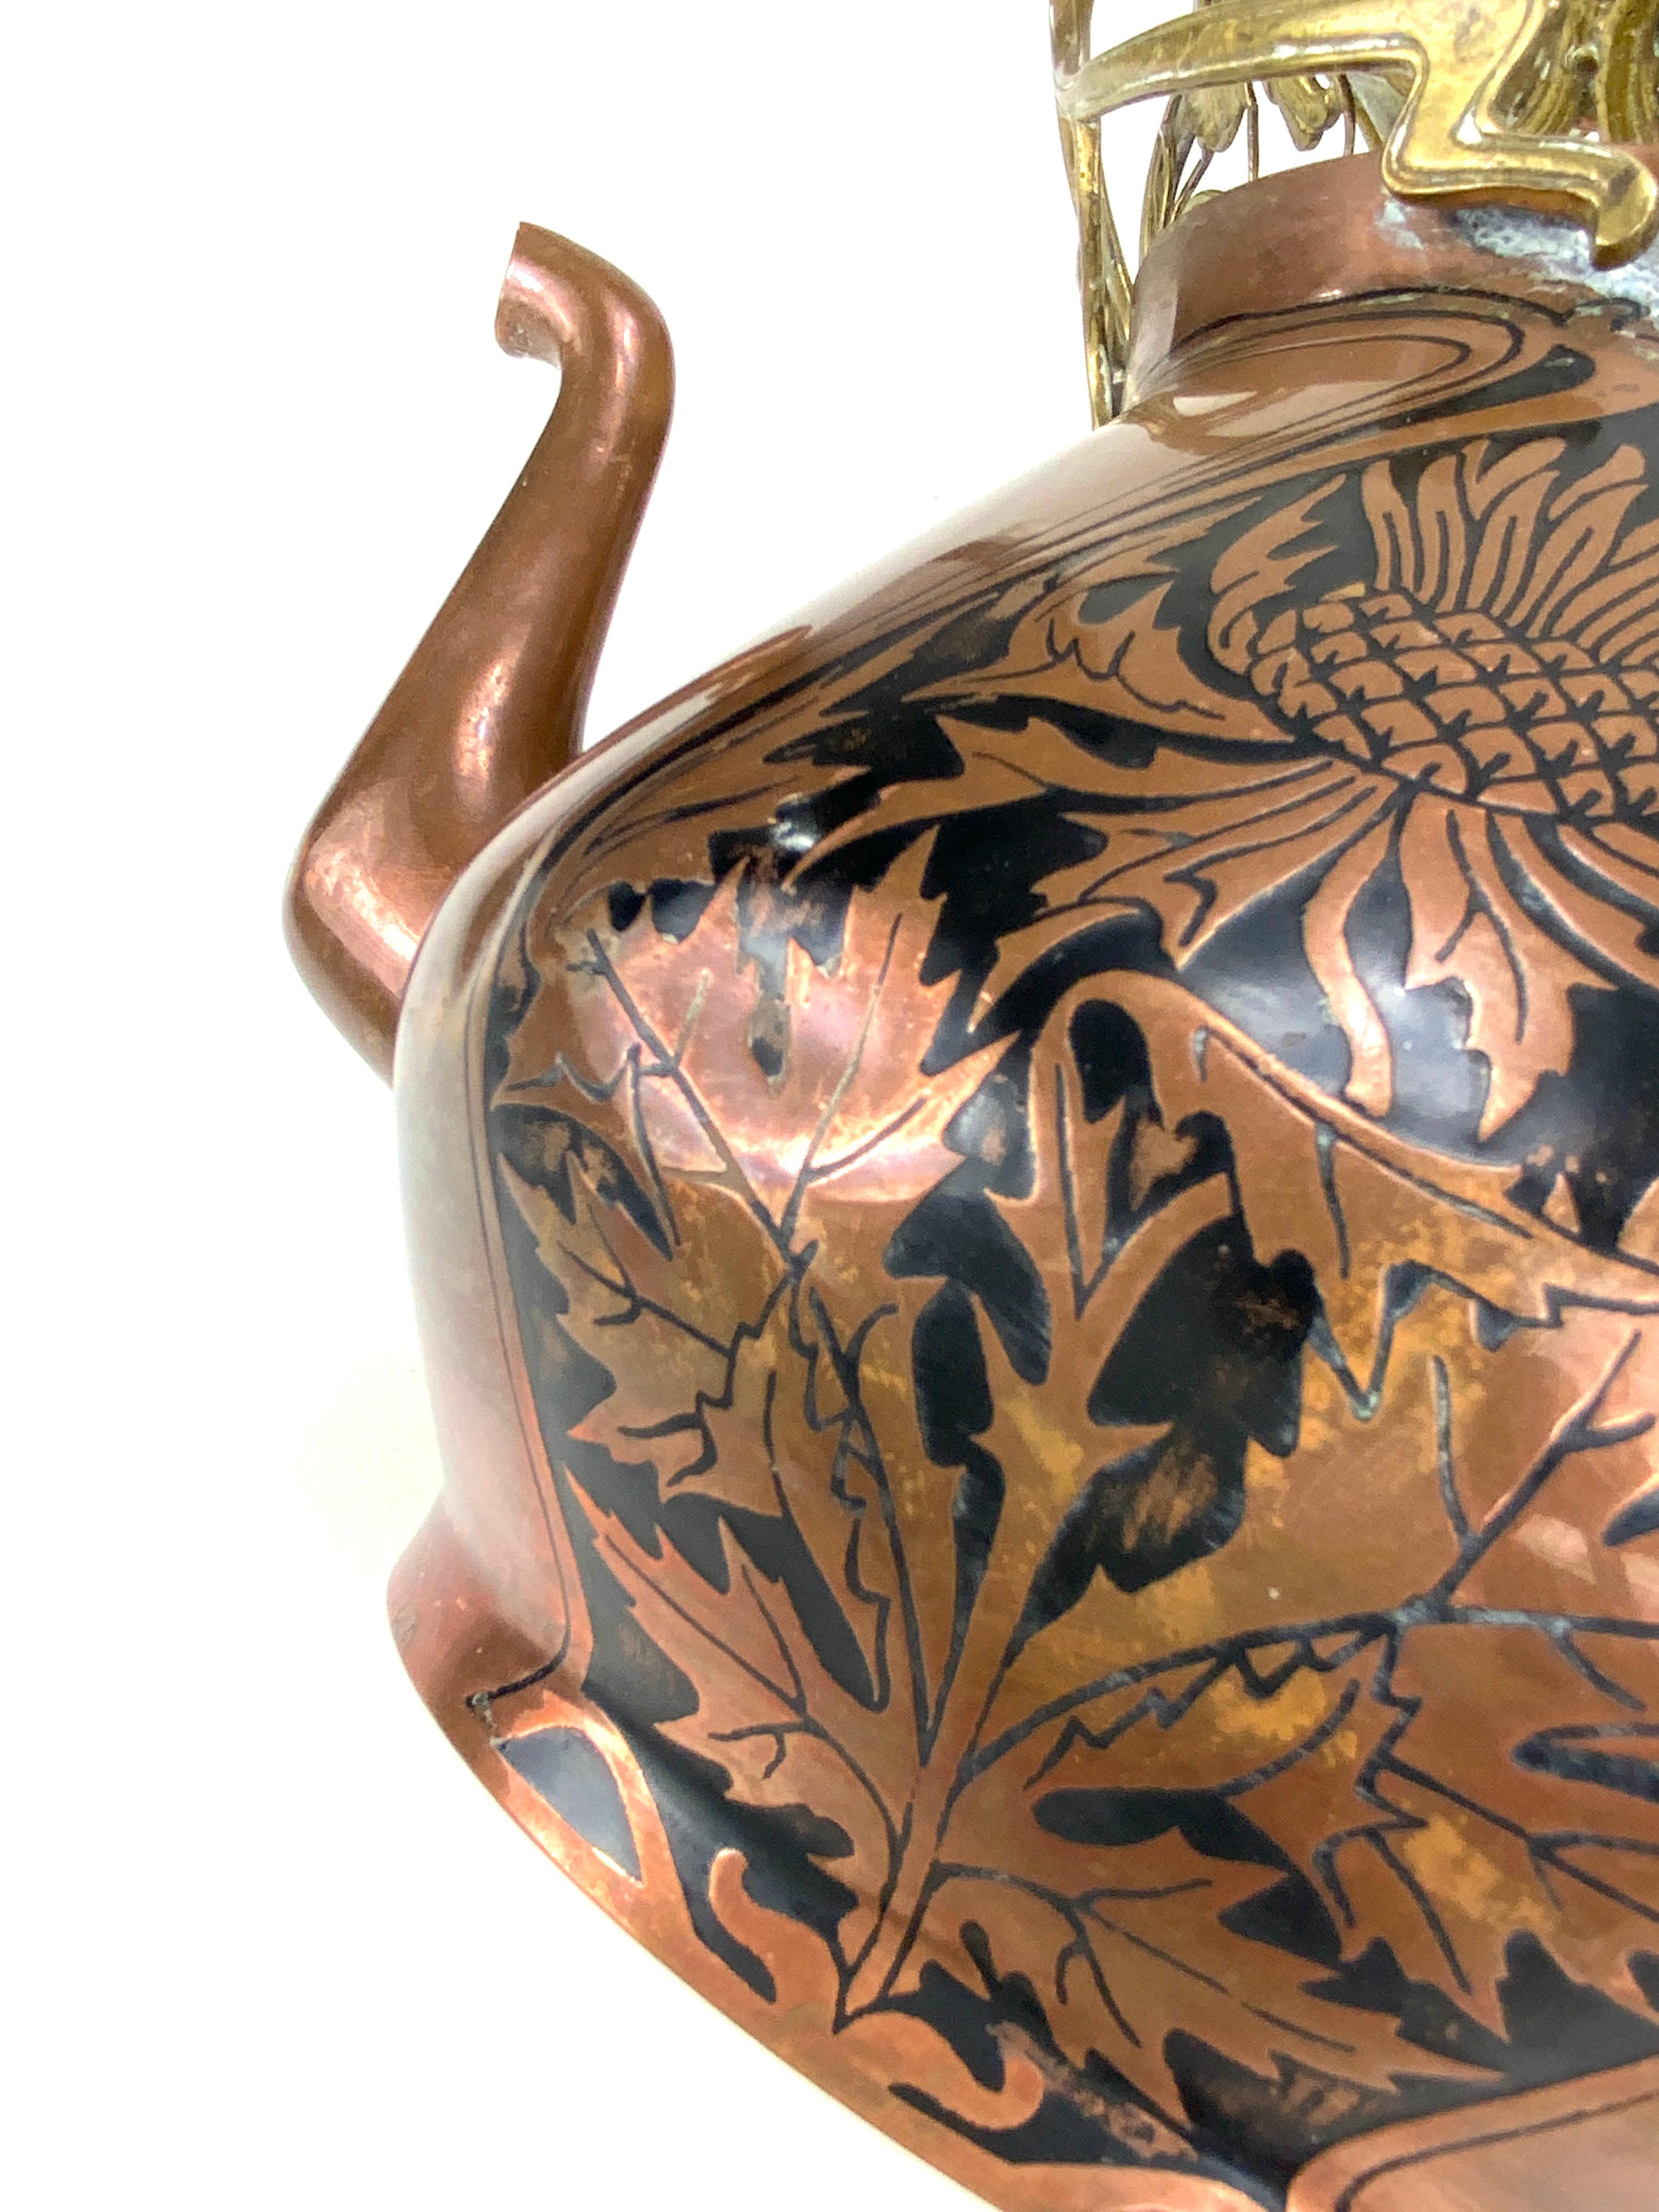 Carl Deffner Art Nouveau Copper Tea Kettle on a Comfort, circa 1895-1900 For Sale 3